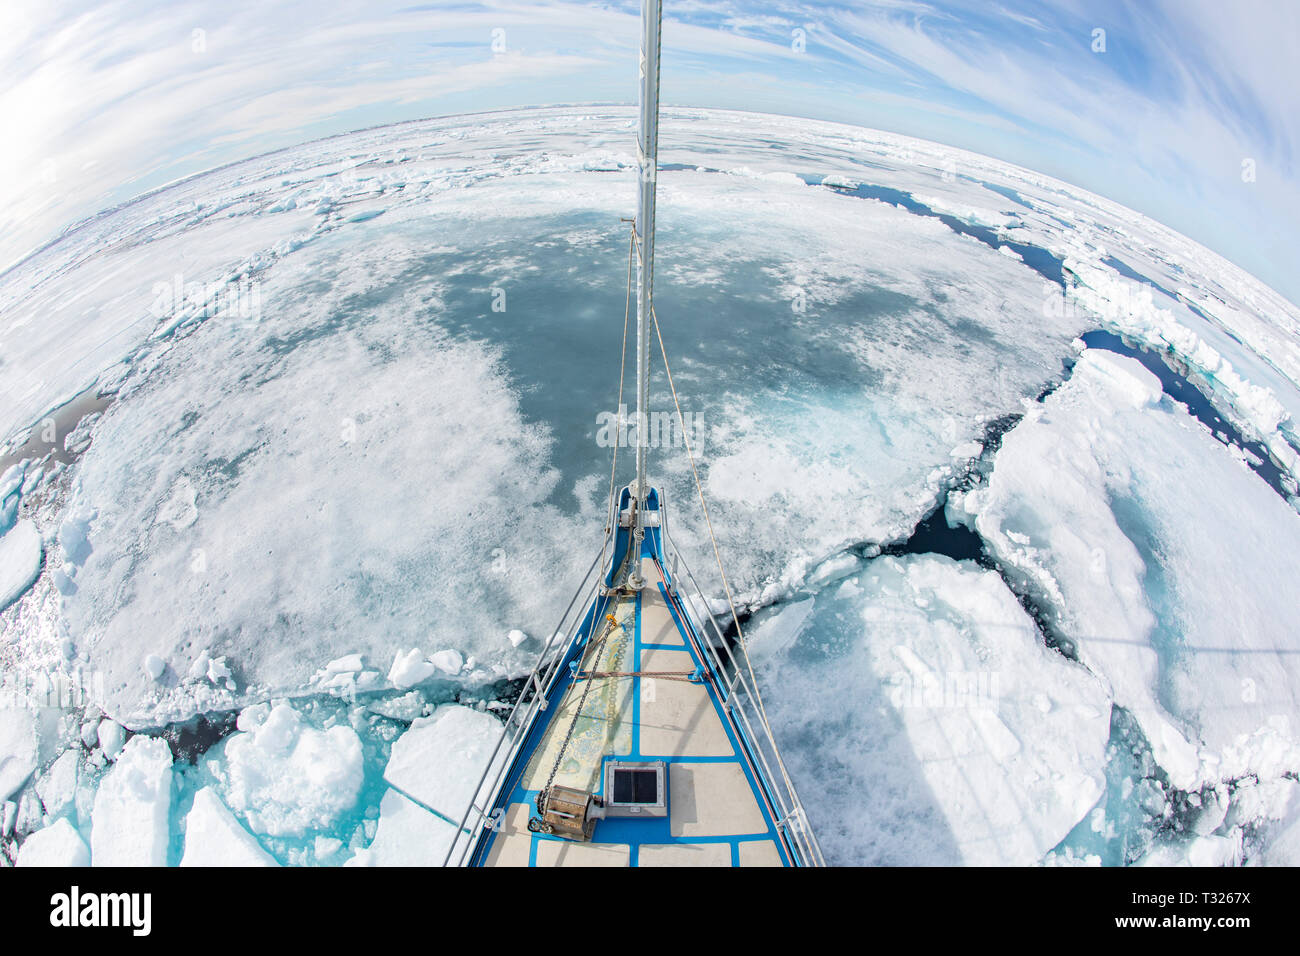 Crociera in Barca a vela, Spitsbergen, Oceano Artico, Norvegia Foto Stock